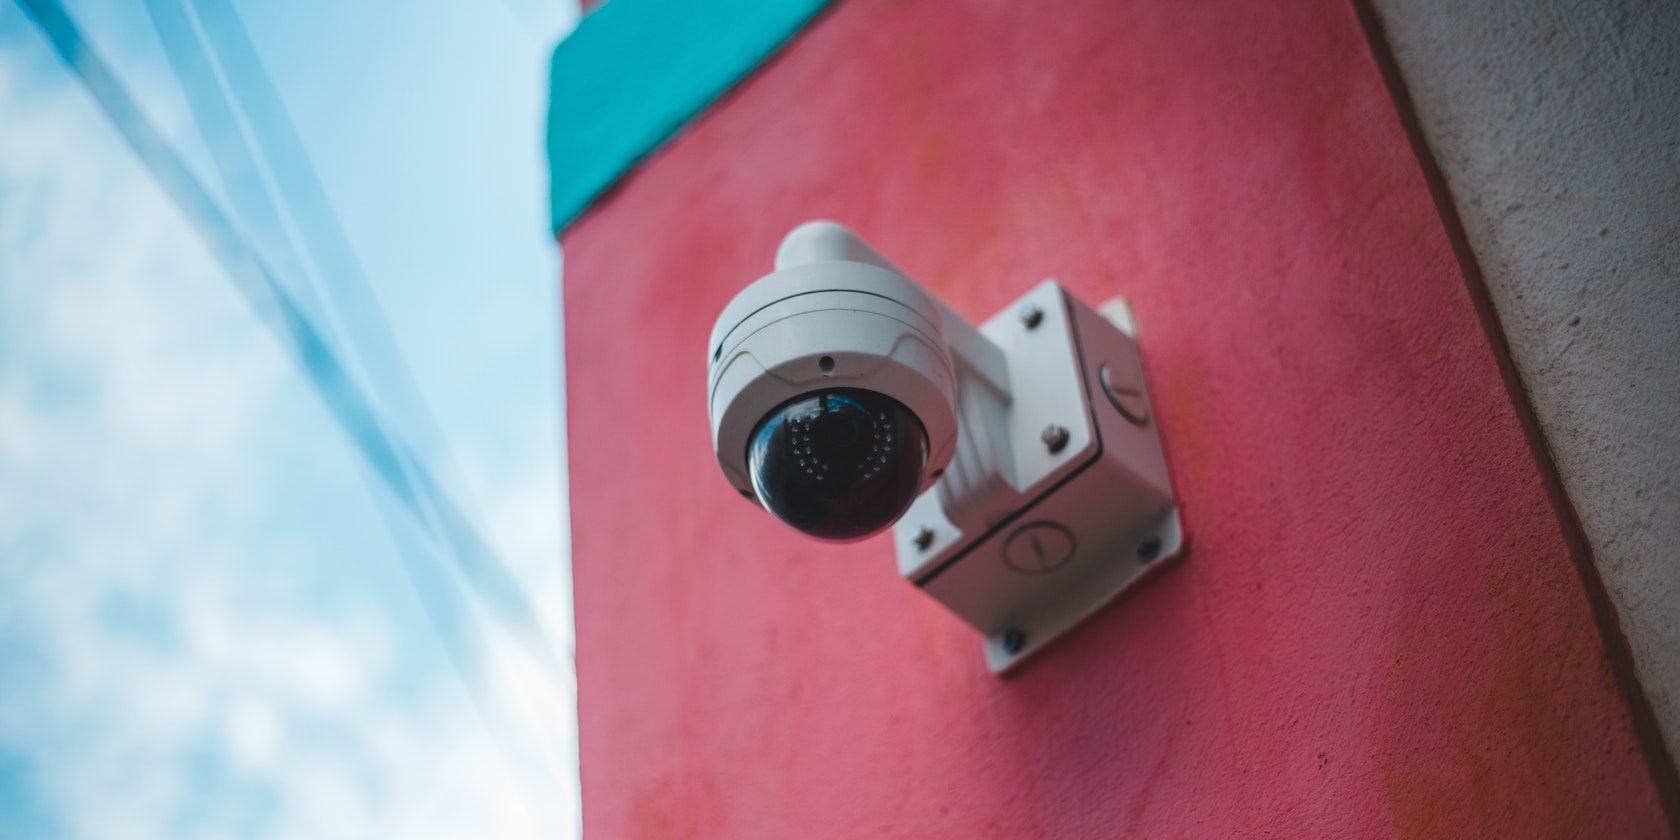 A close-up shot of a security camera